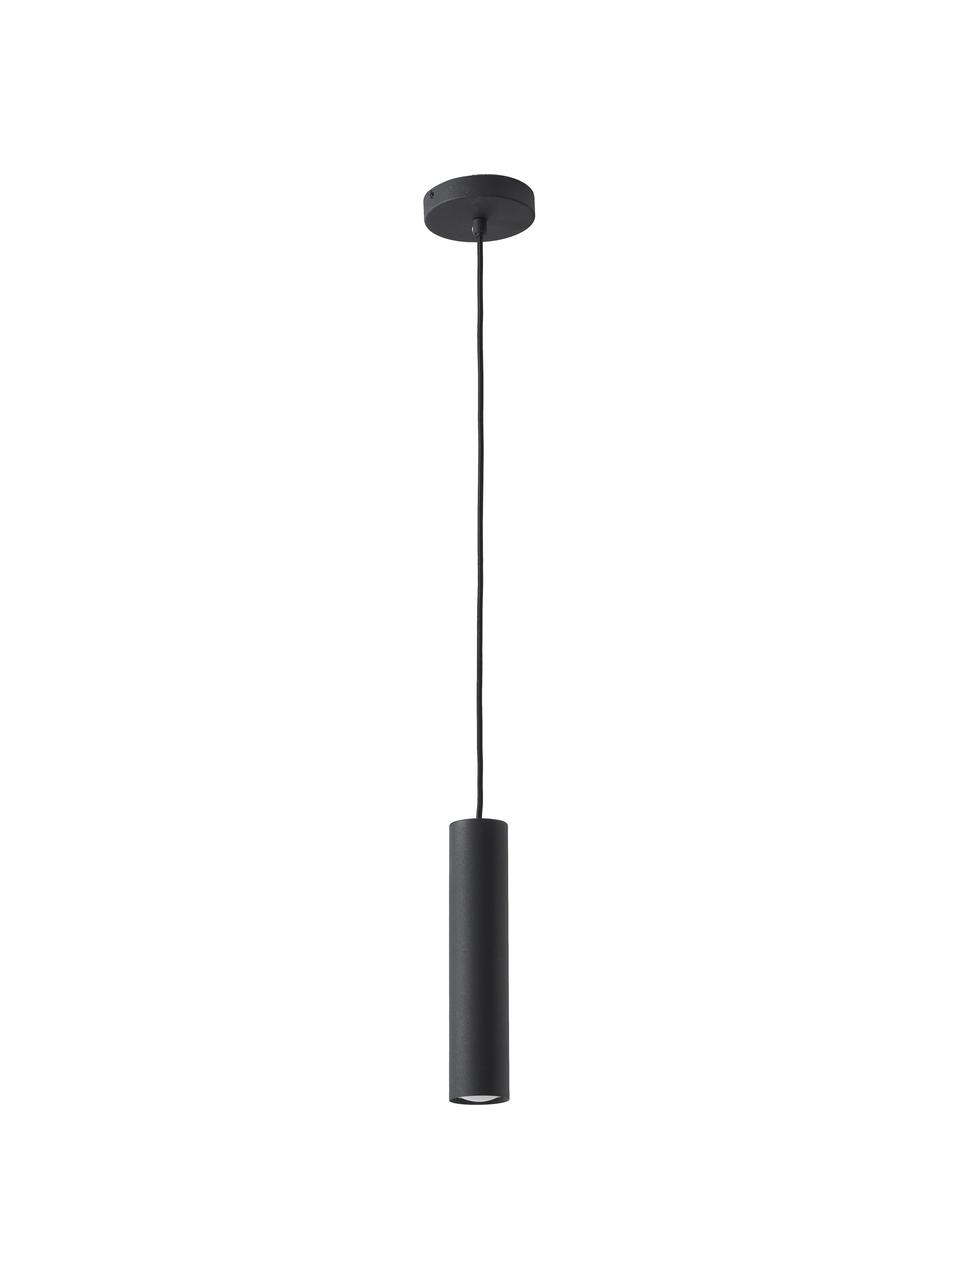 Malé závěsné svítidlo Paris, Černá, Ø 6 cm, V 28 cm